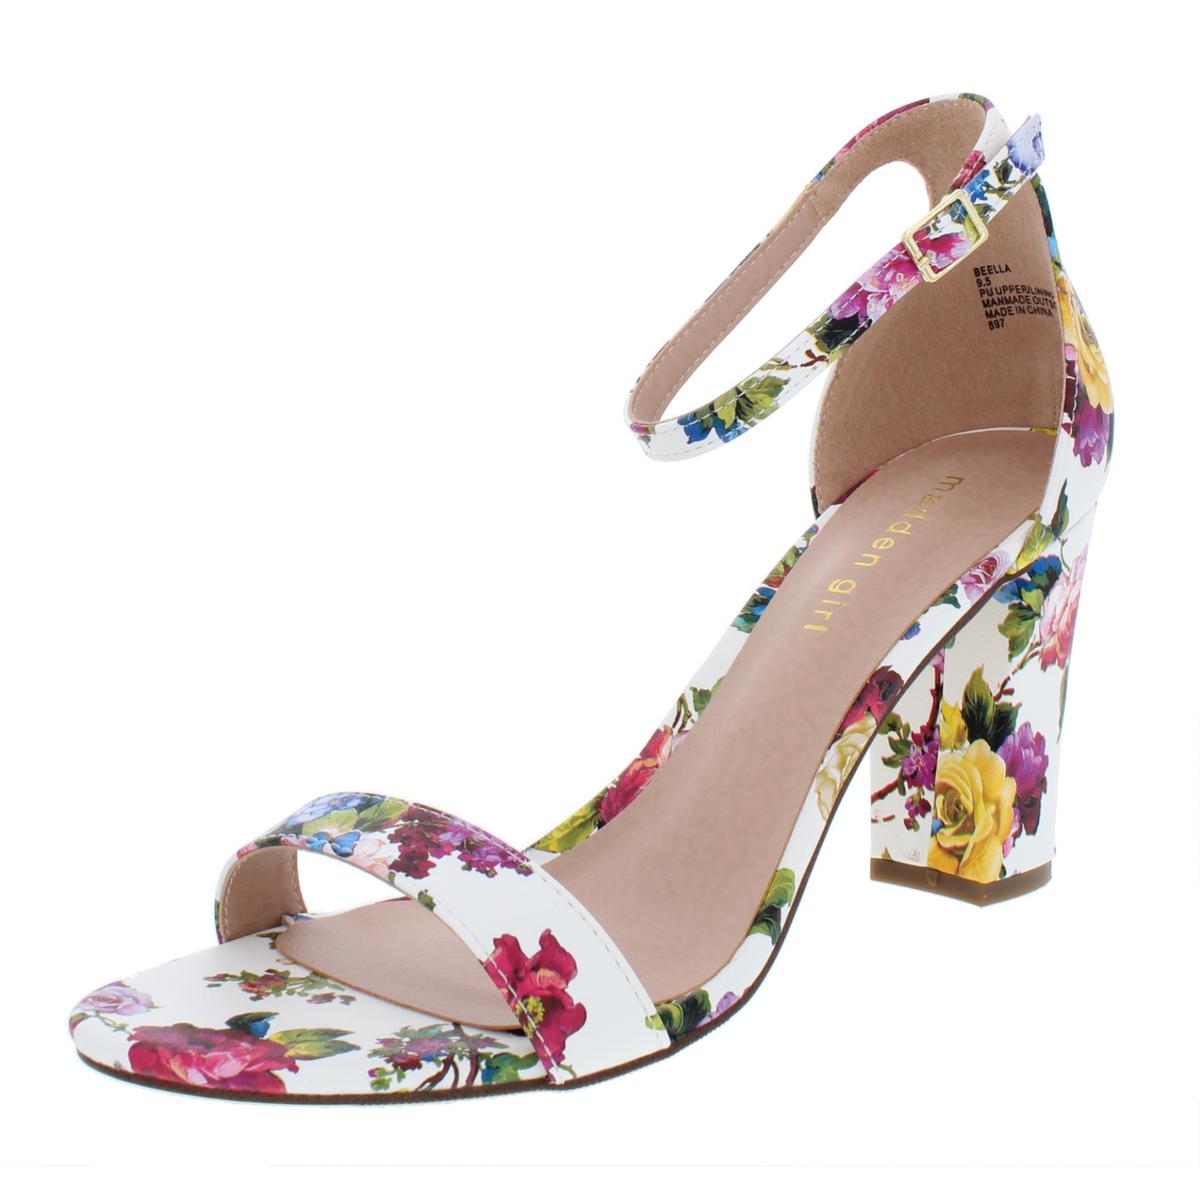 Madden Girl Womens Beella White Dress Sandals Shoes 5.5 Medium (B,M ...